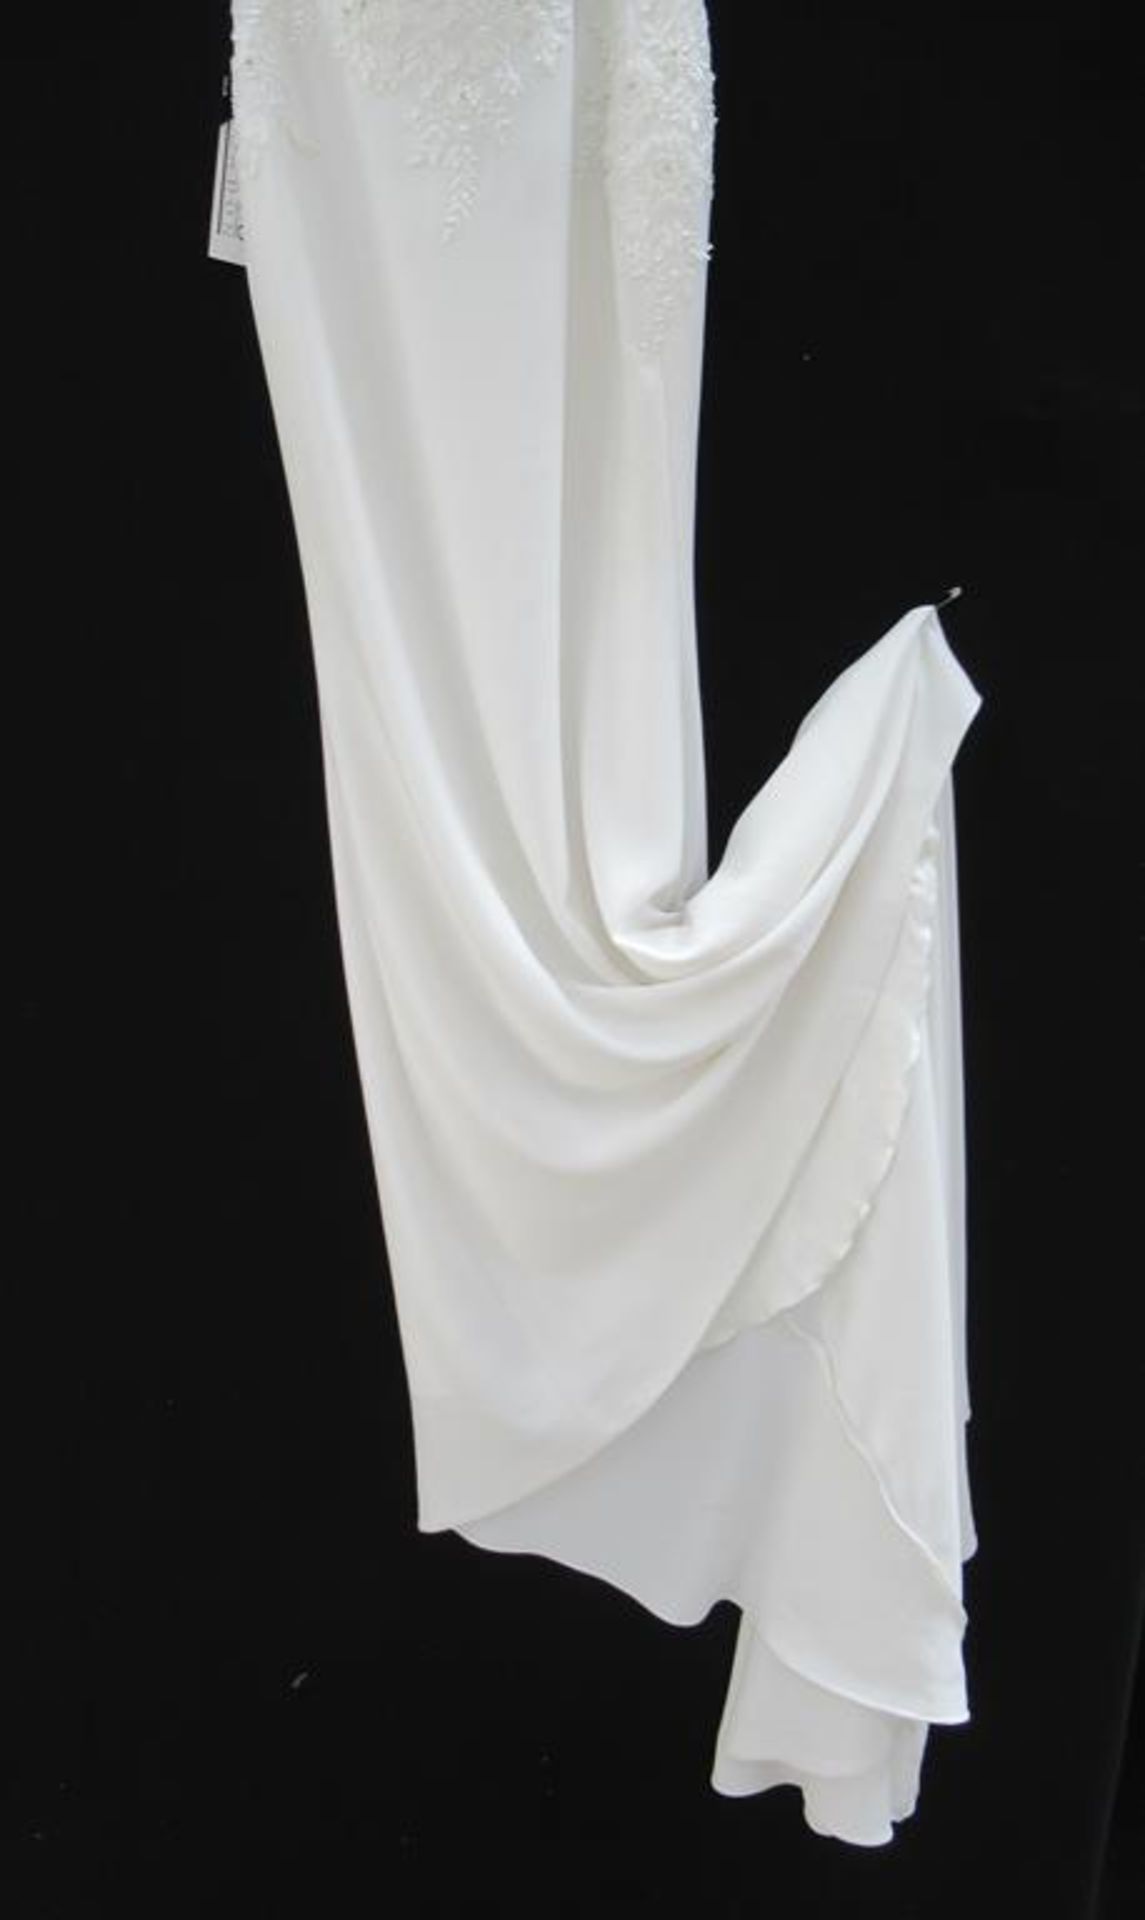 DandoLondon 'Desire' wedding dress - Image 3 of 3